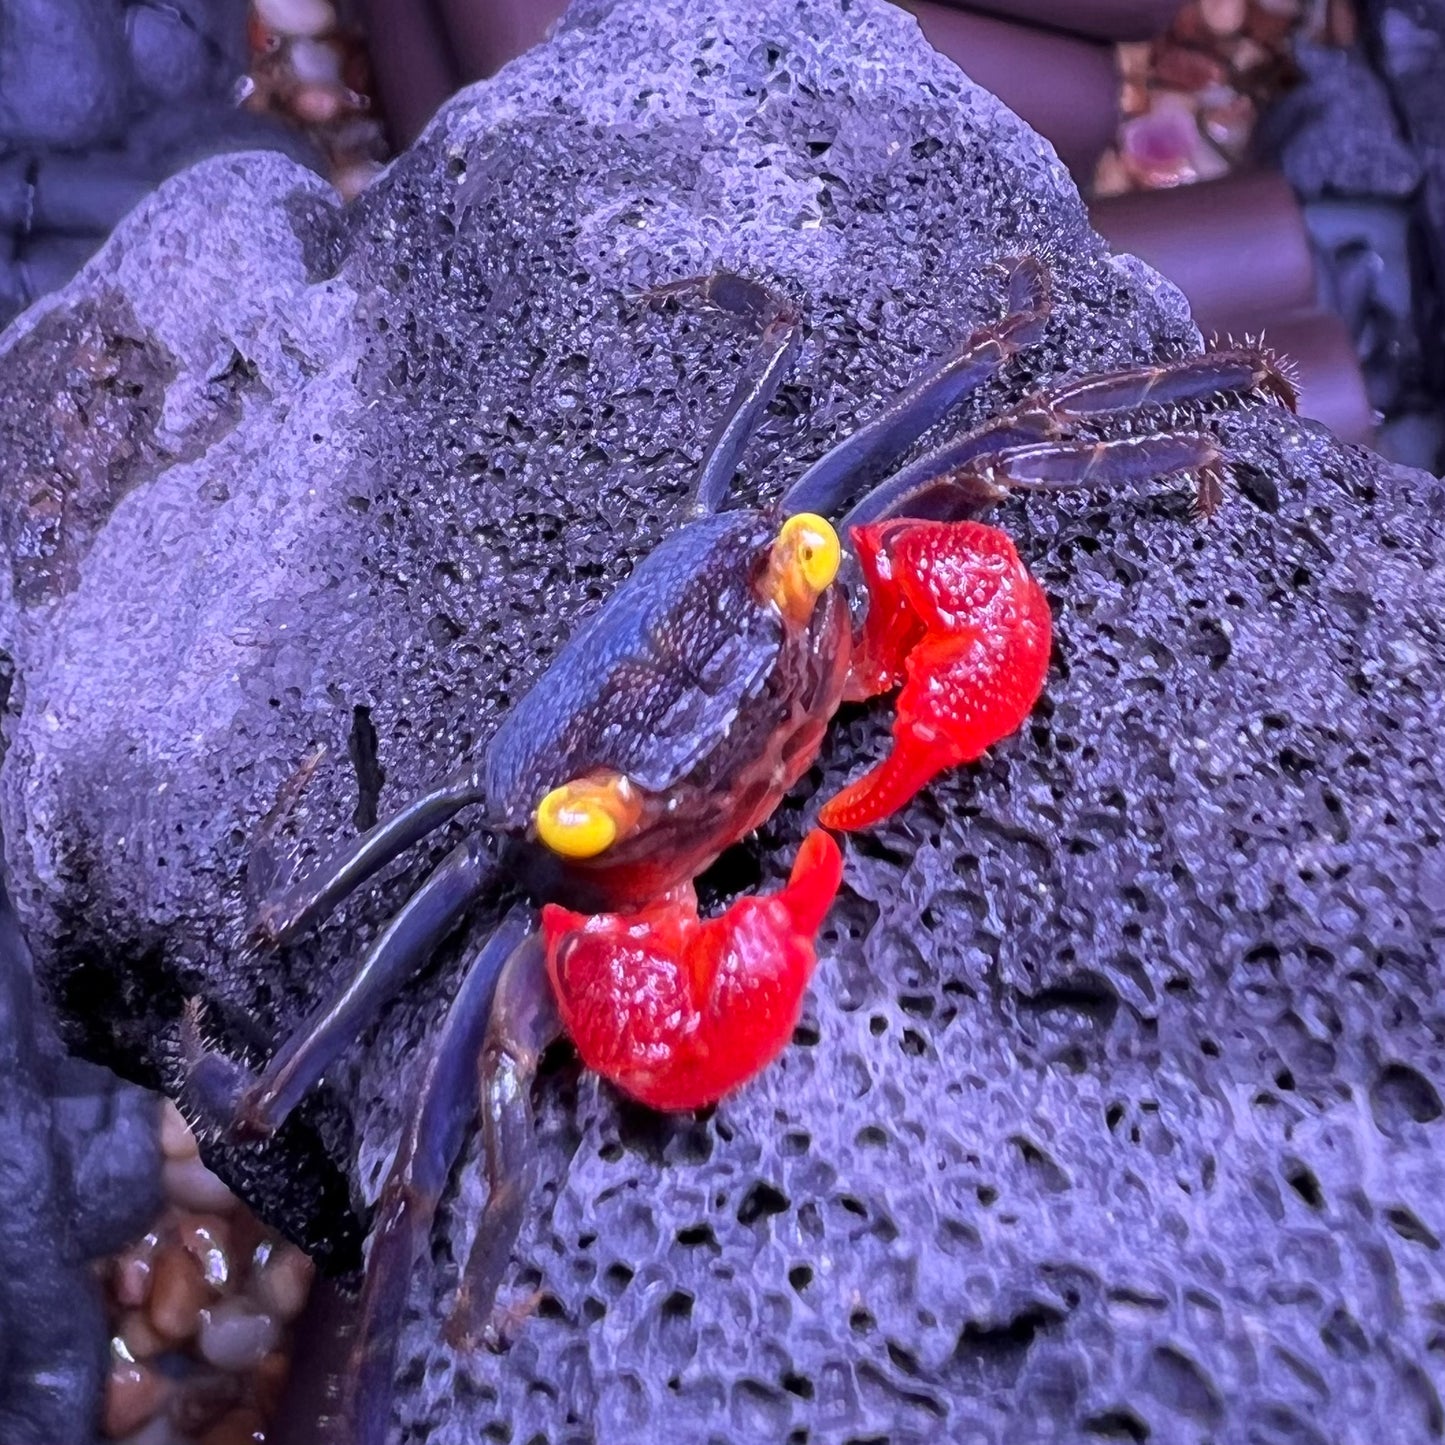 紅手幽靈惡魔蟹 Red Gloves Vampire Crab ( Geosesarma sp )